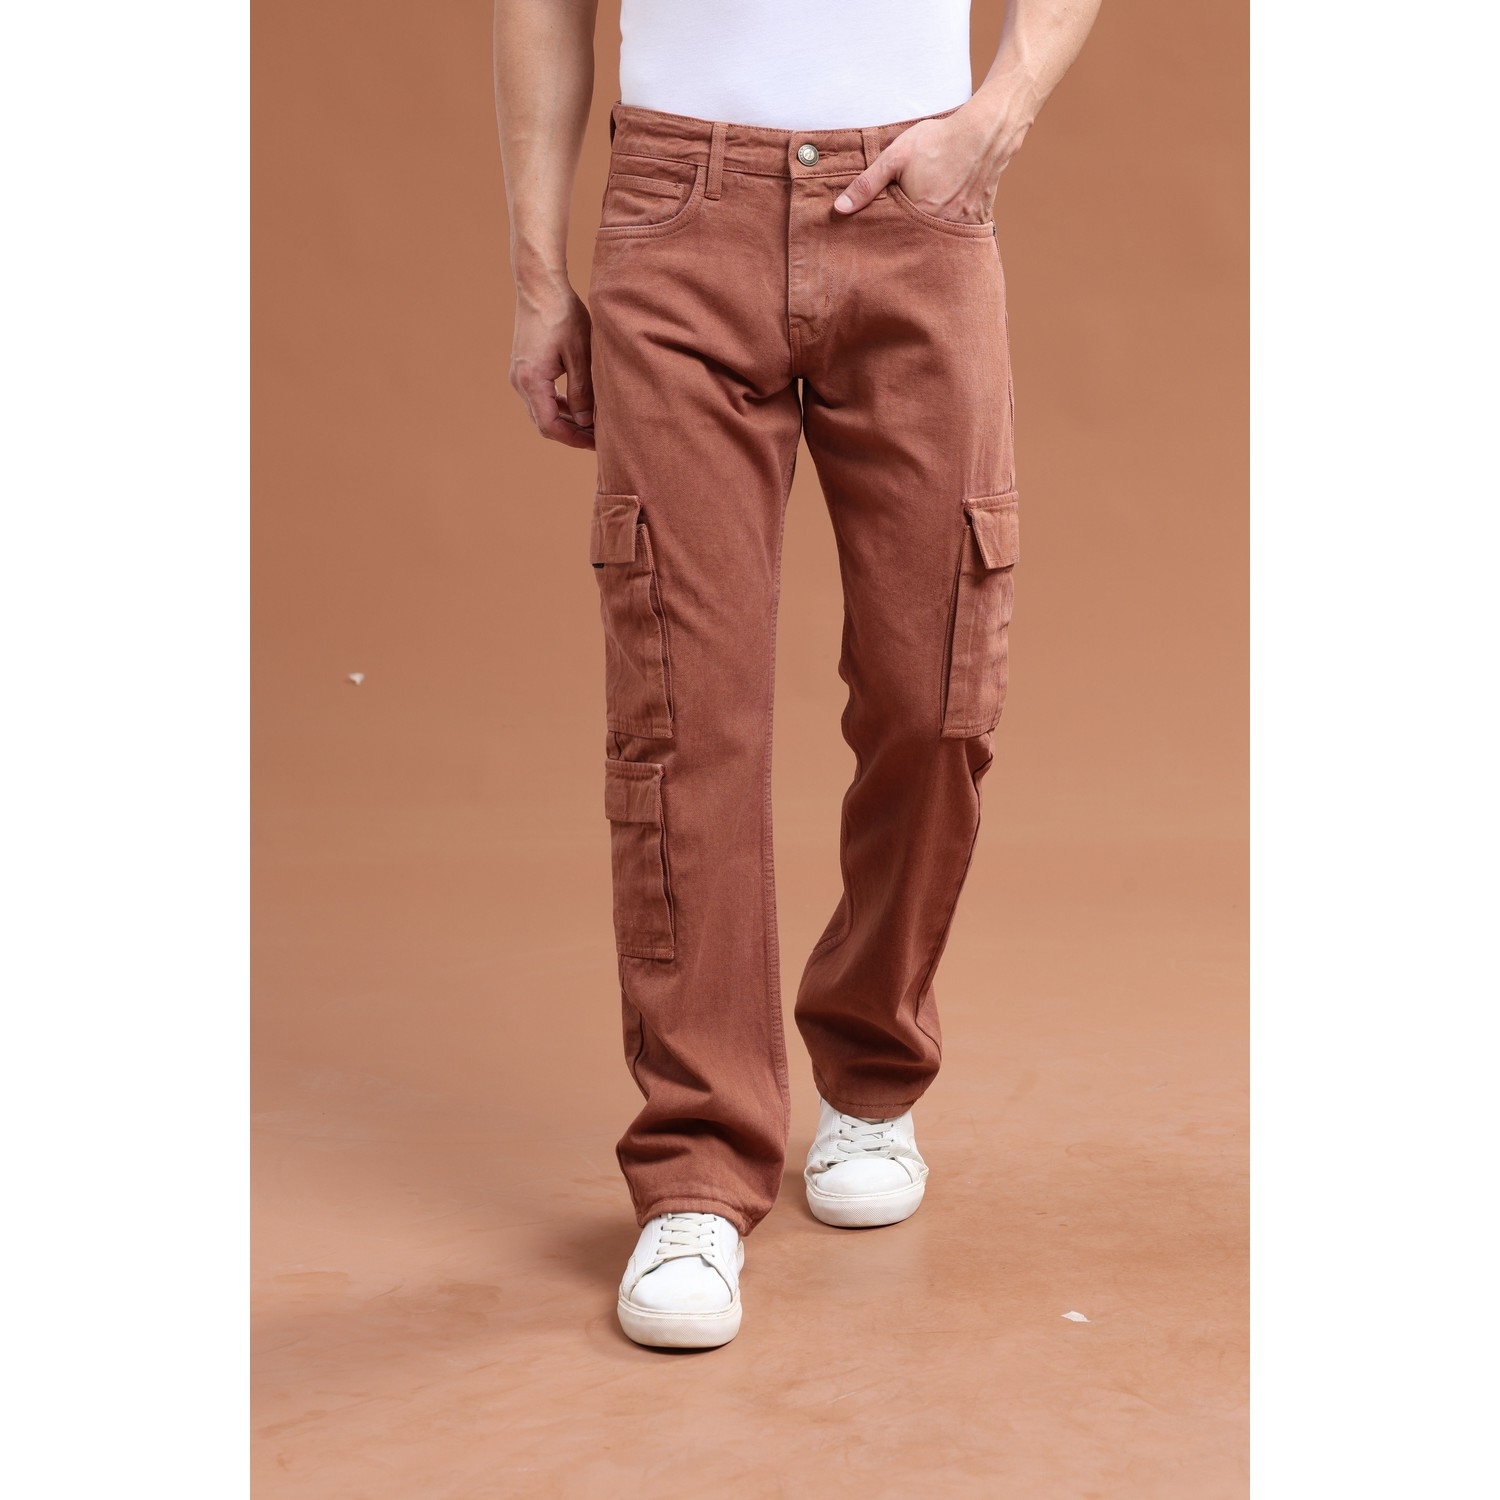 Chestnut Brown Cargo Pants